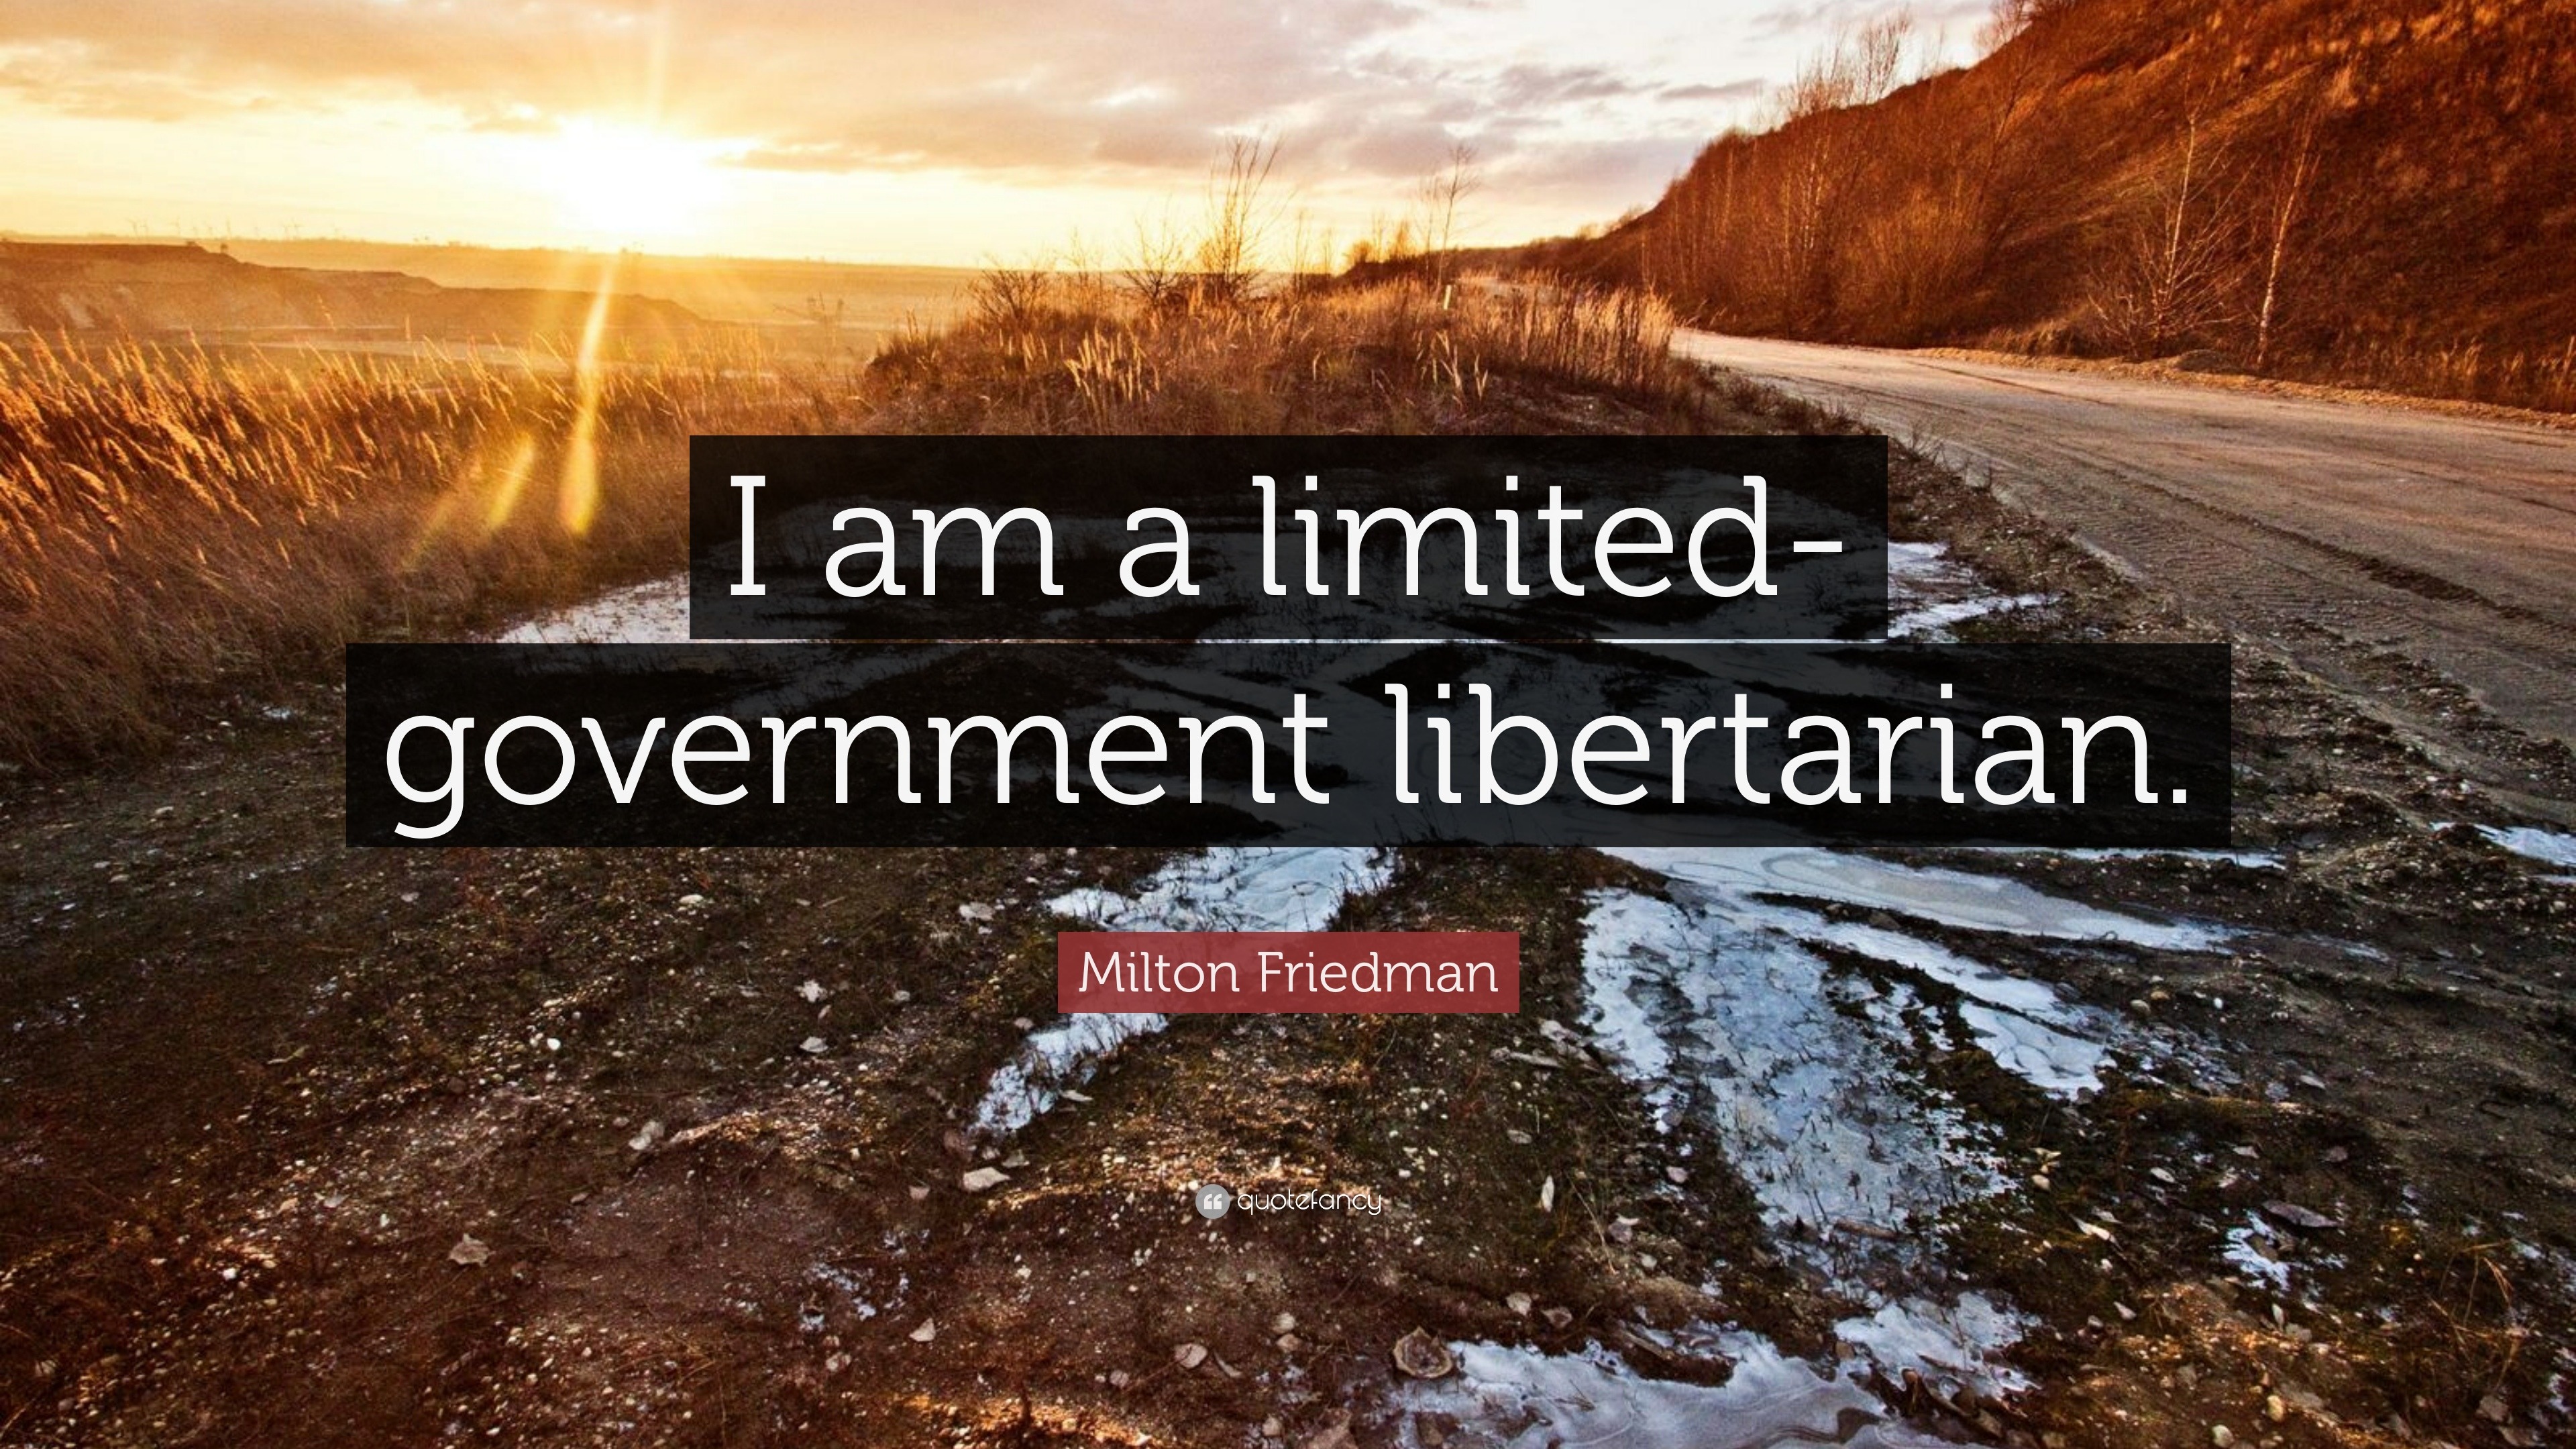 Milton Friedman Quote “I am a limitedgovernment libertarian.”